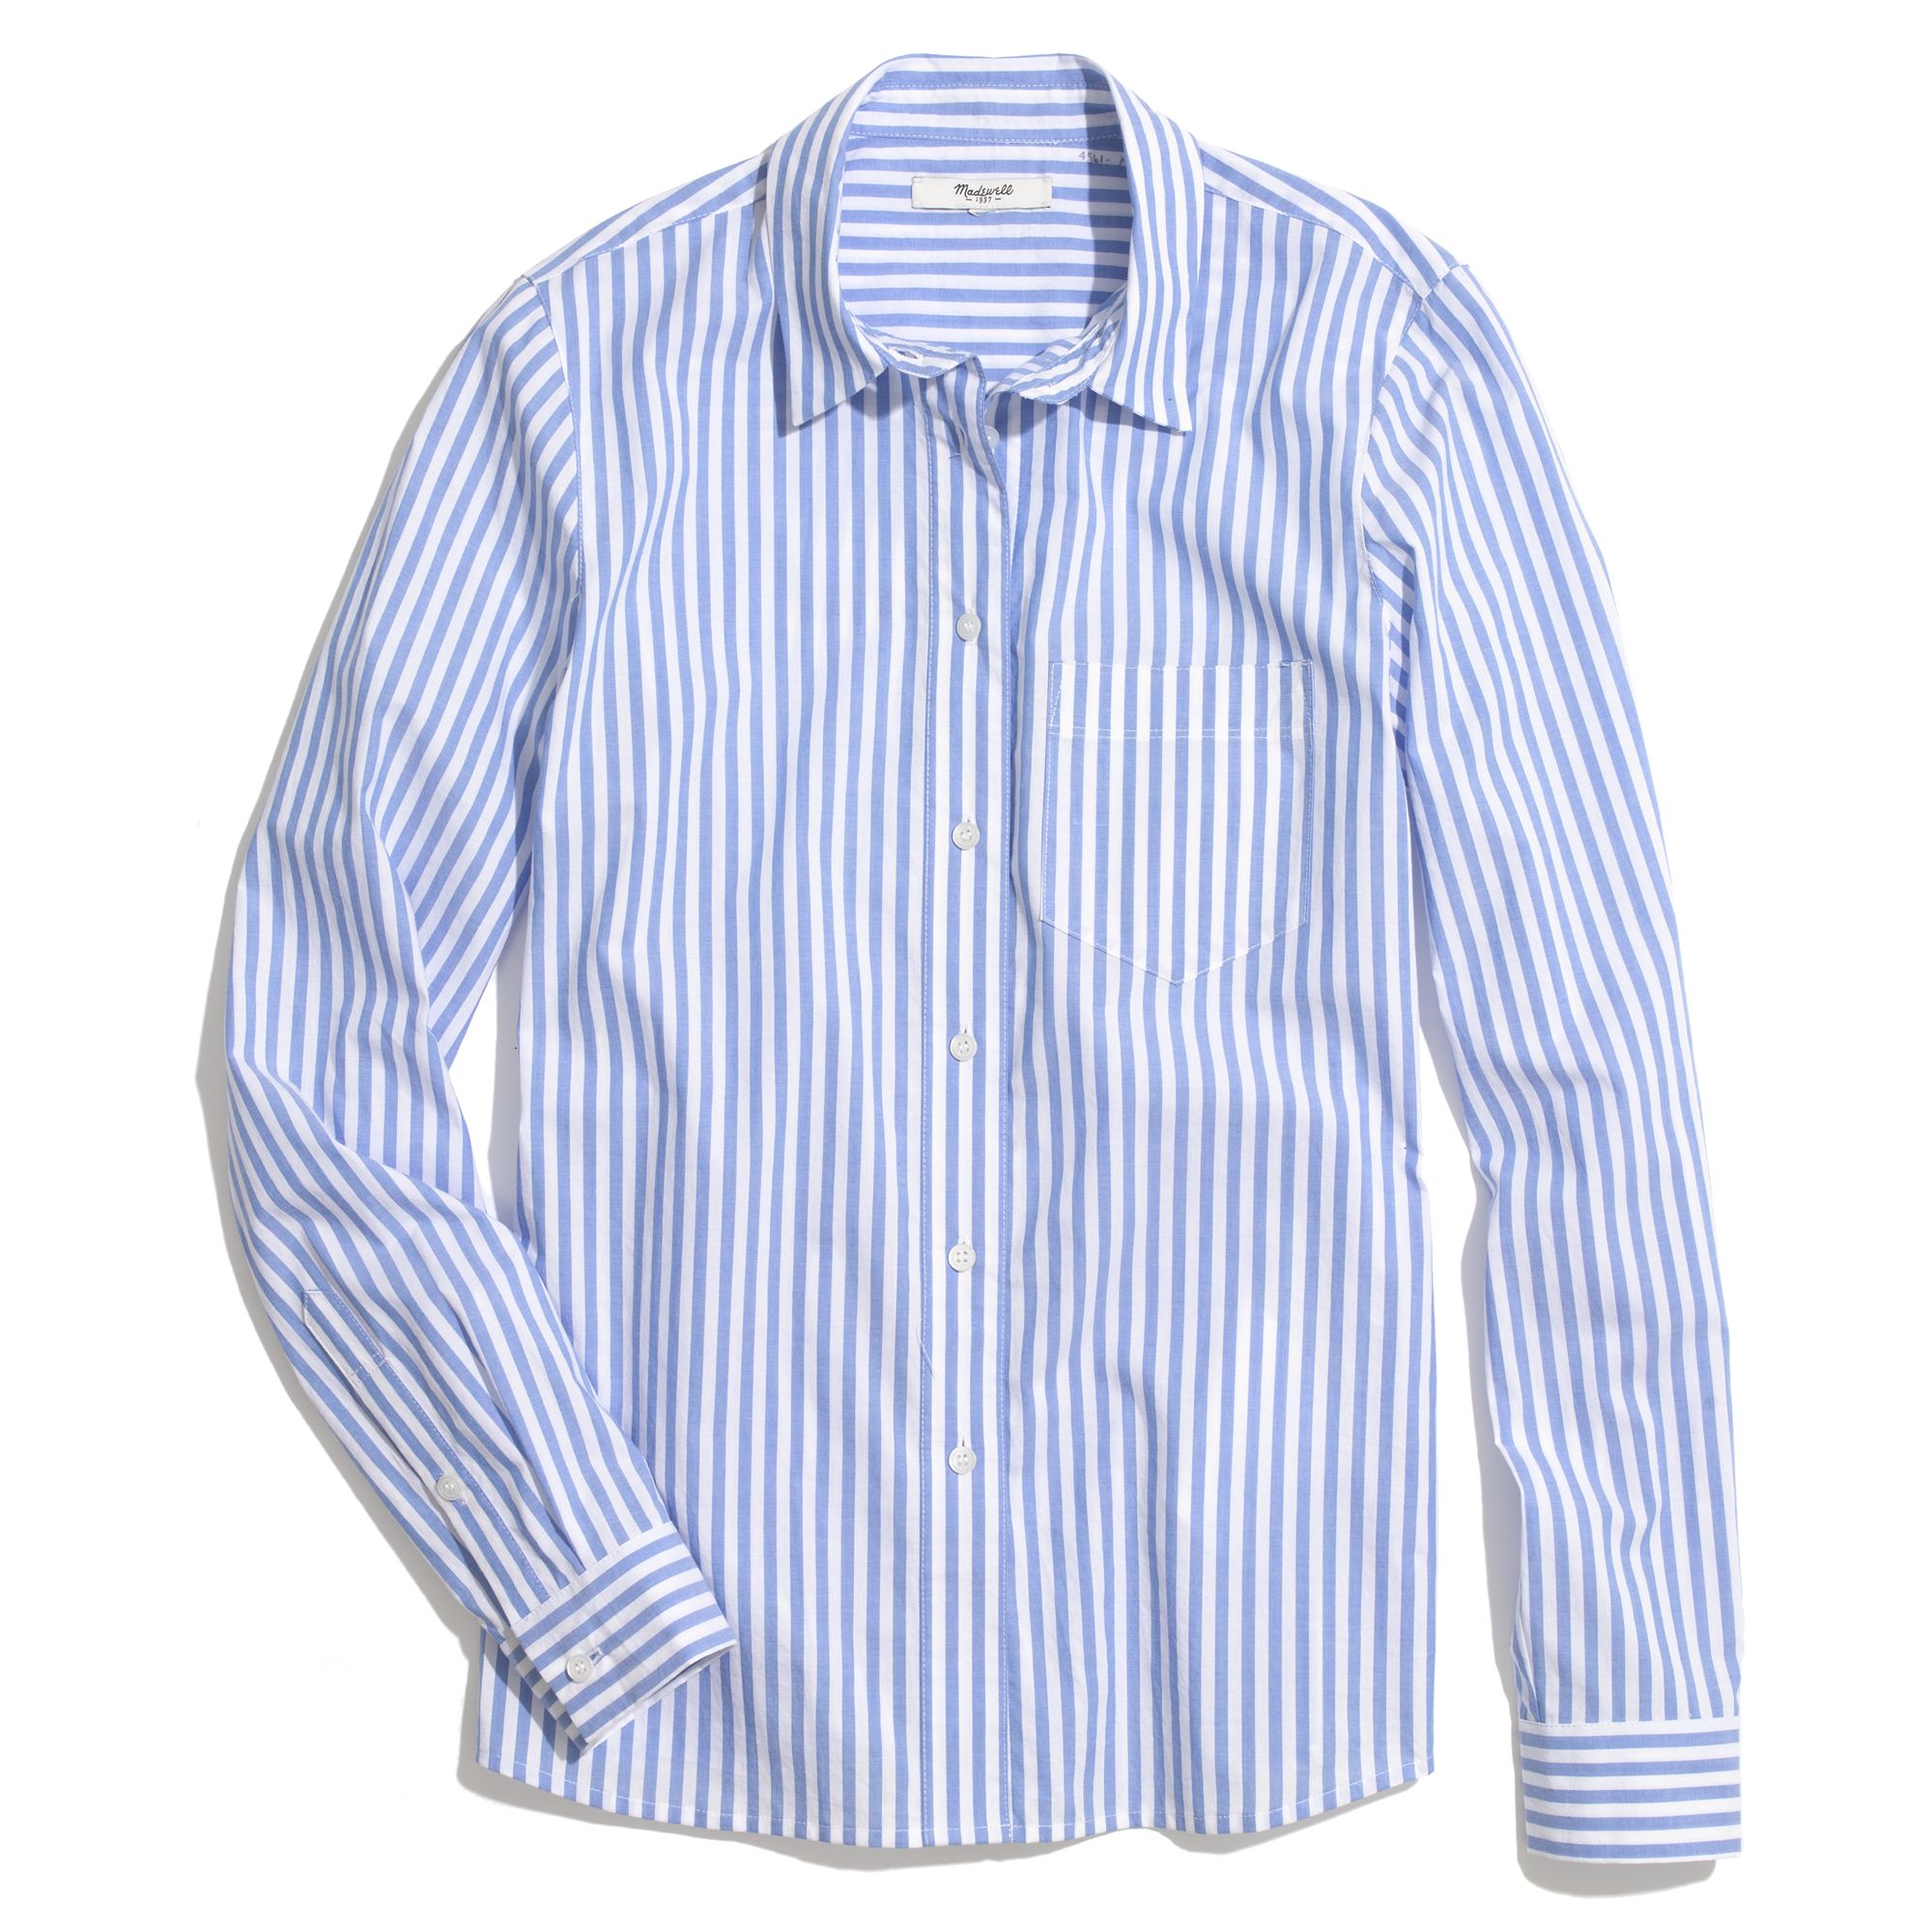 Lyst - Madewell Cafeacute Striped Boy Shirt in Blue